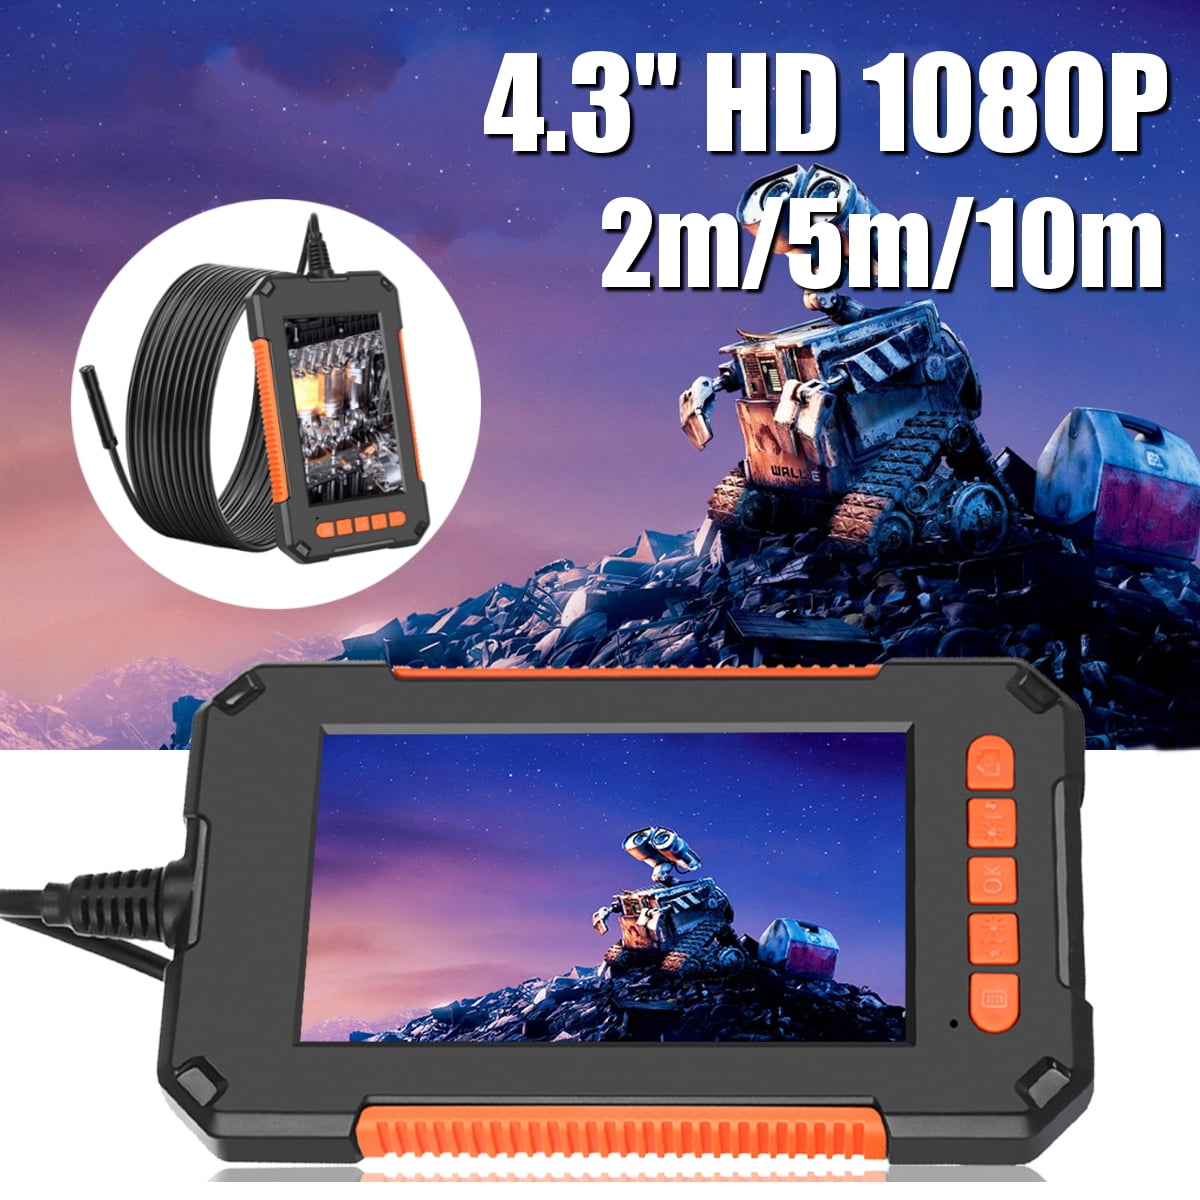 HD1080P 4.3" Orange Display Screen Industrial Endoscope Camera Borescope Monitor